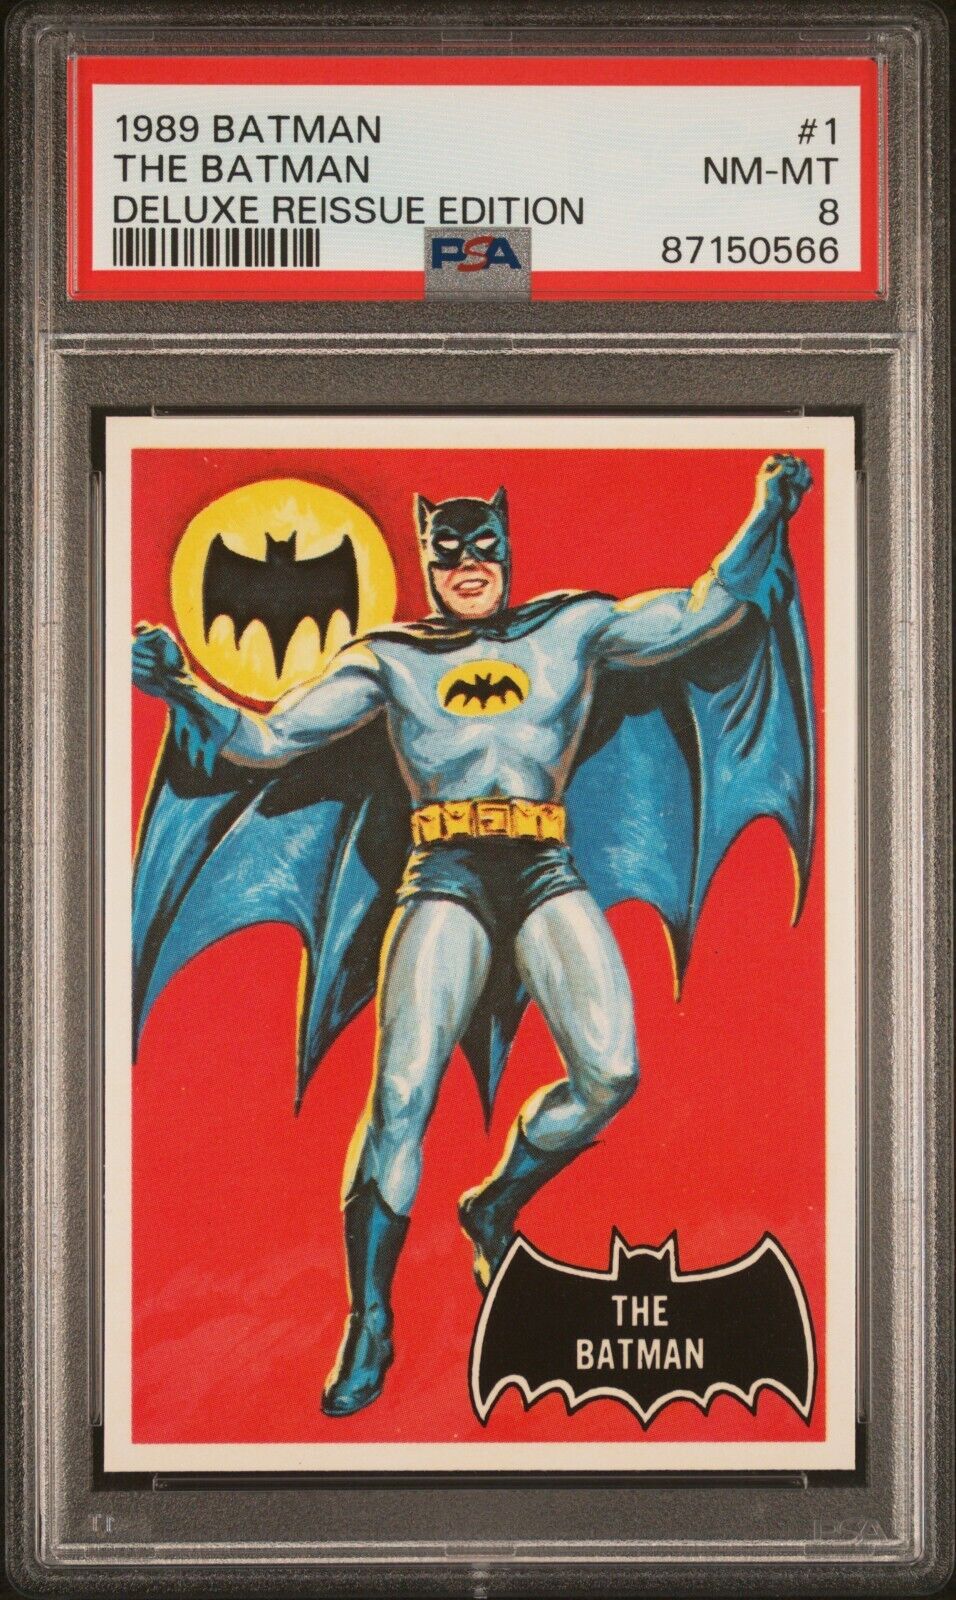 The Batman 1966 Topps Batman #1 1989 Deluxe Reissue PSA 8 POP 7 only 6^